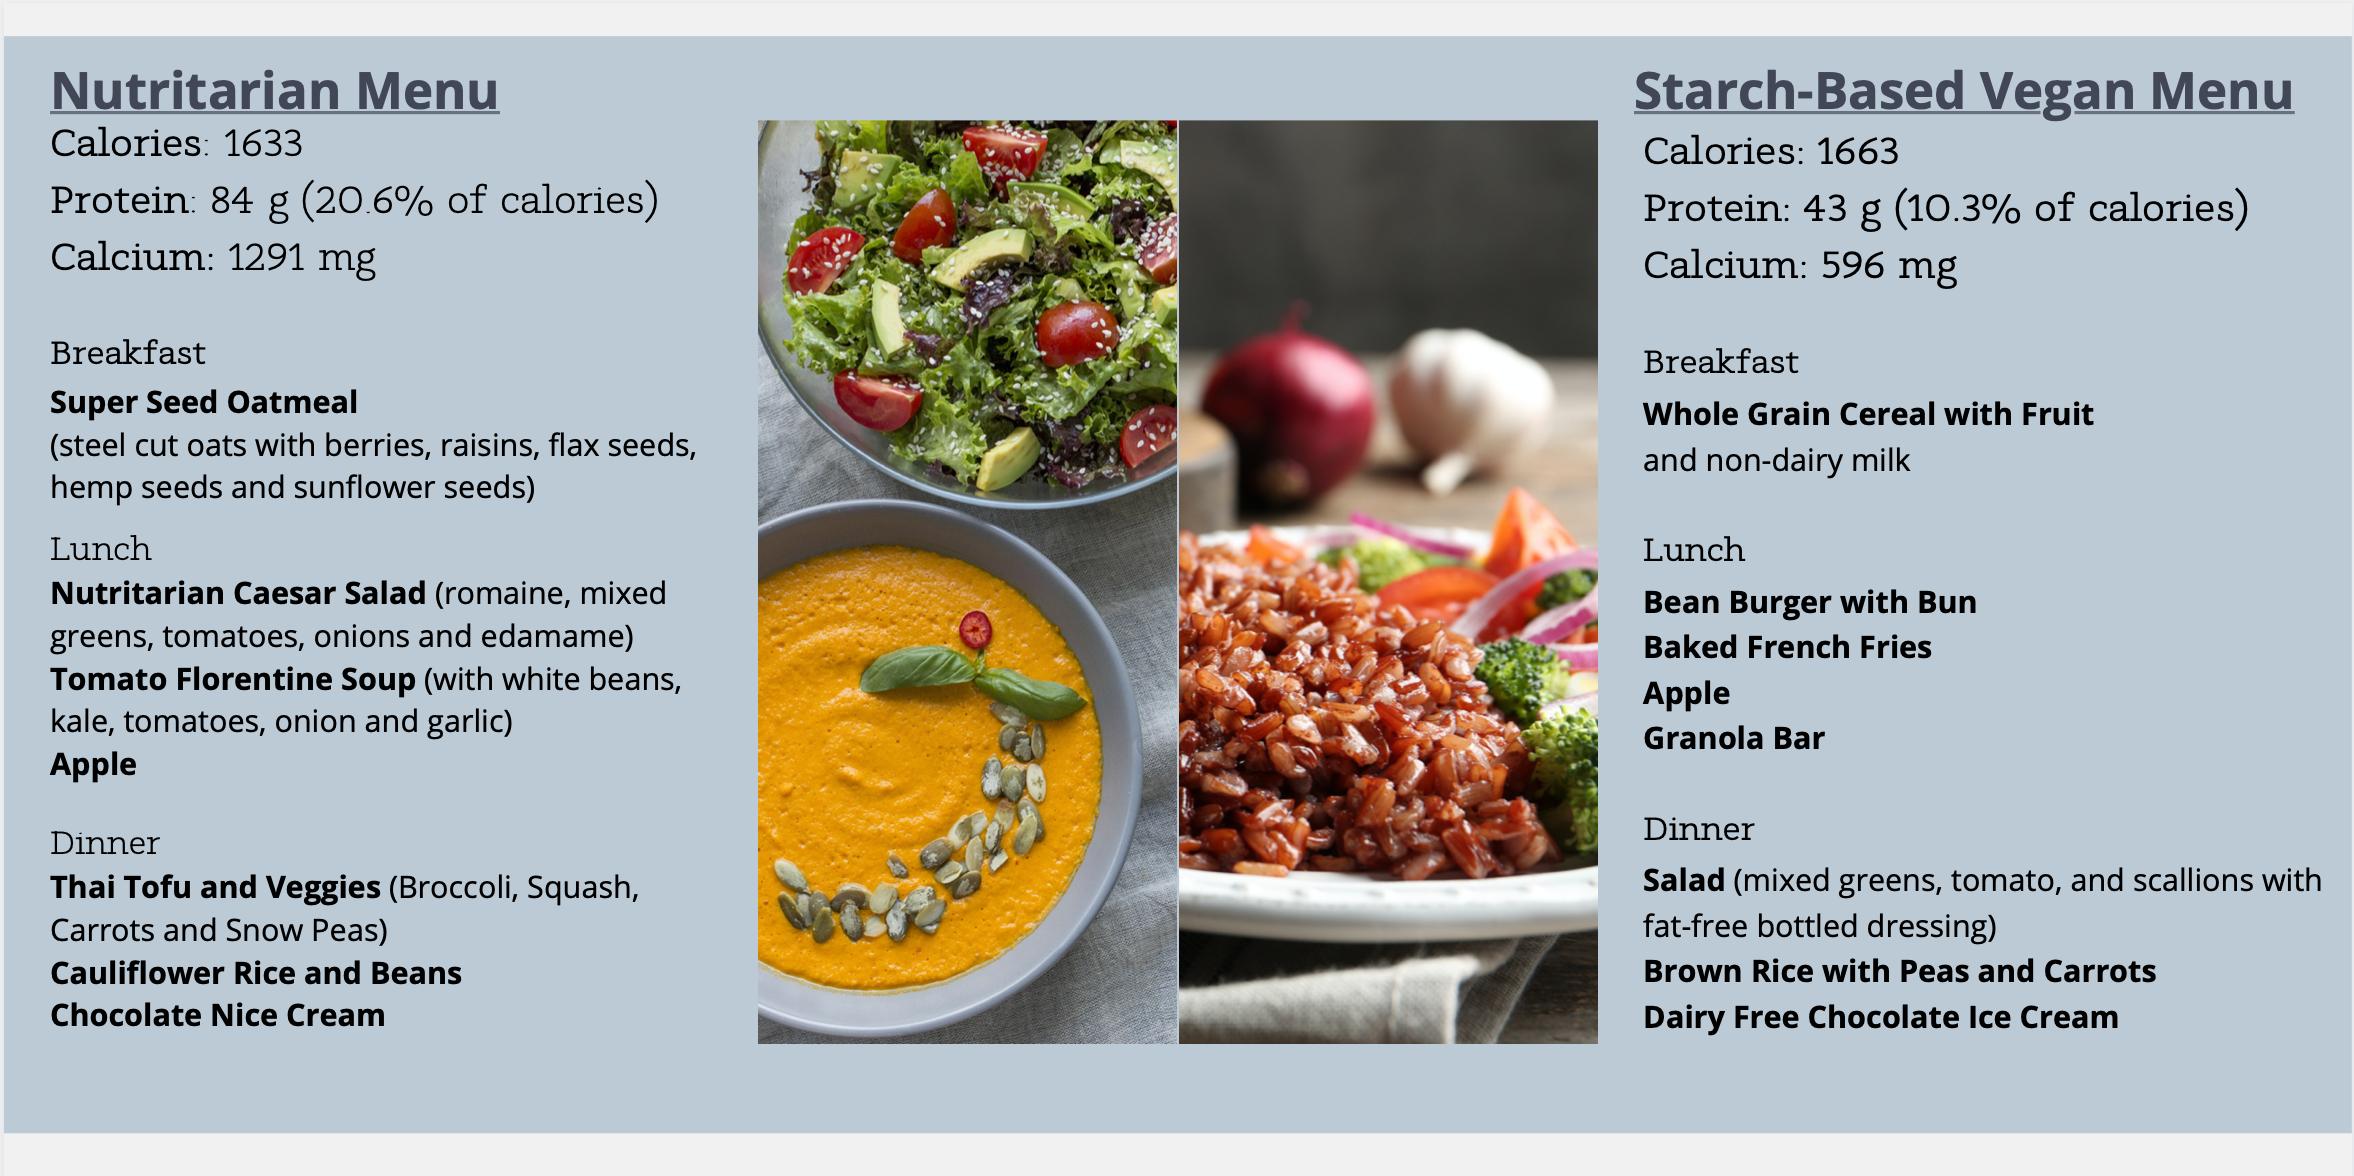 nutrition menu vs starch-based vegan menu graphic